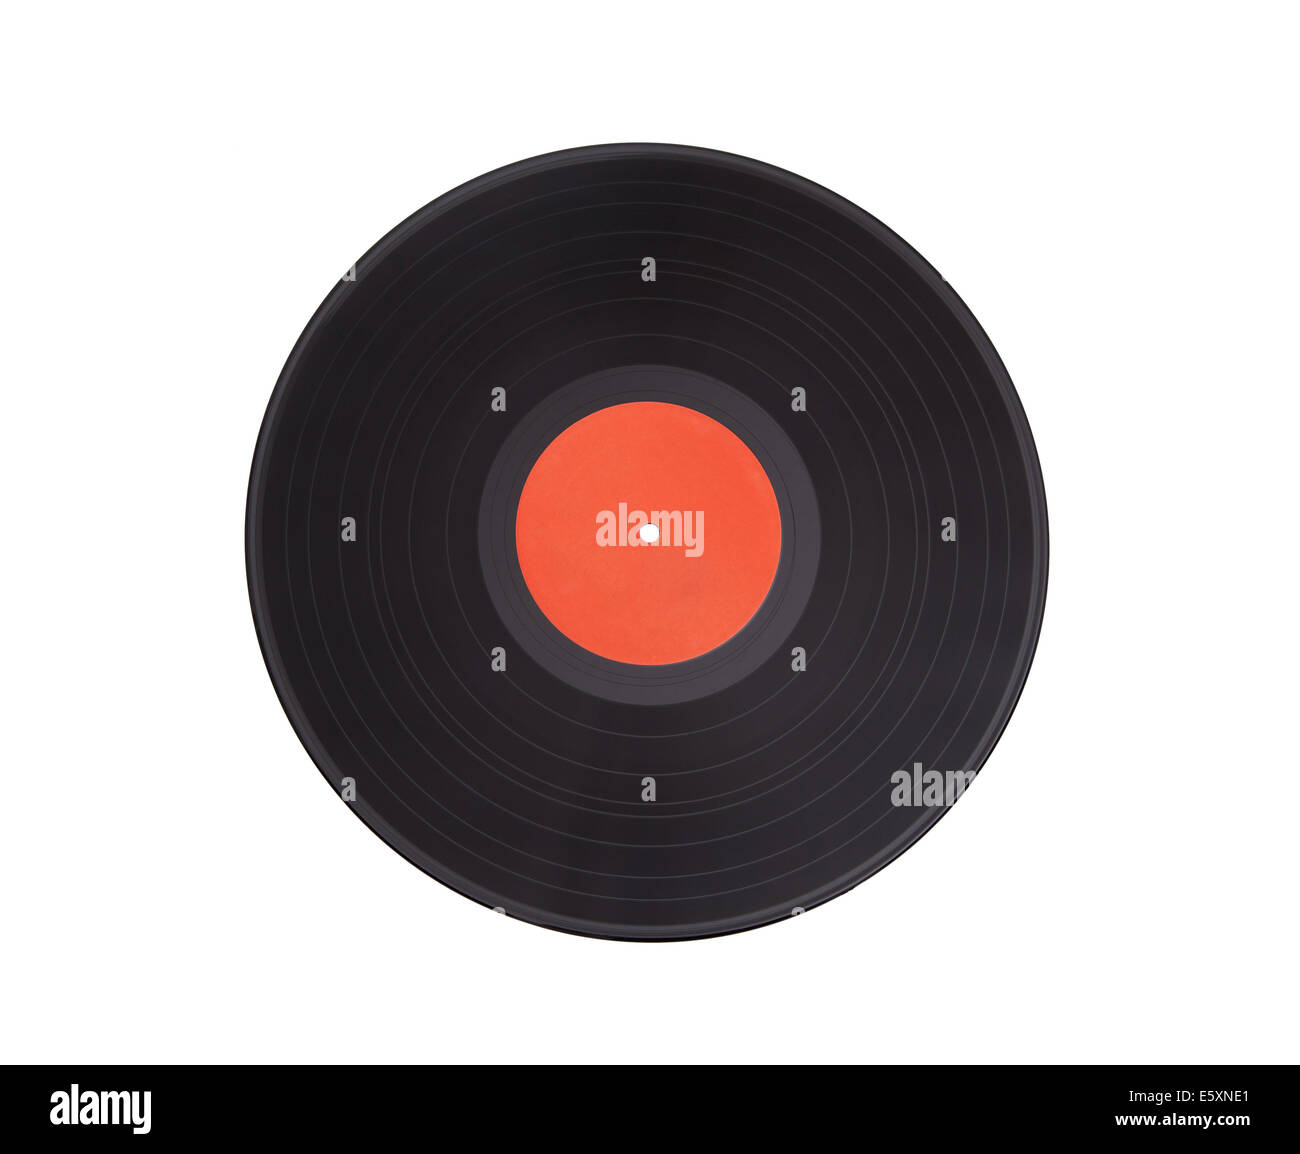 Schwarzes Vinyl Record Lp Album CD - isoliert lange spielen Scheibe mit leere Beschriftung in rot Stockfoto